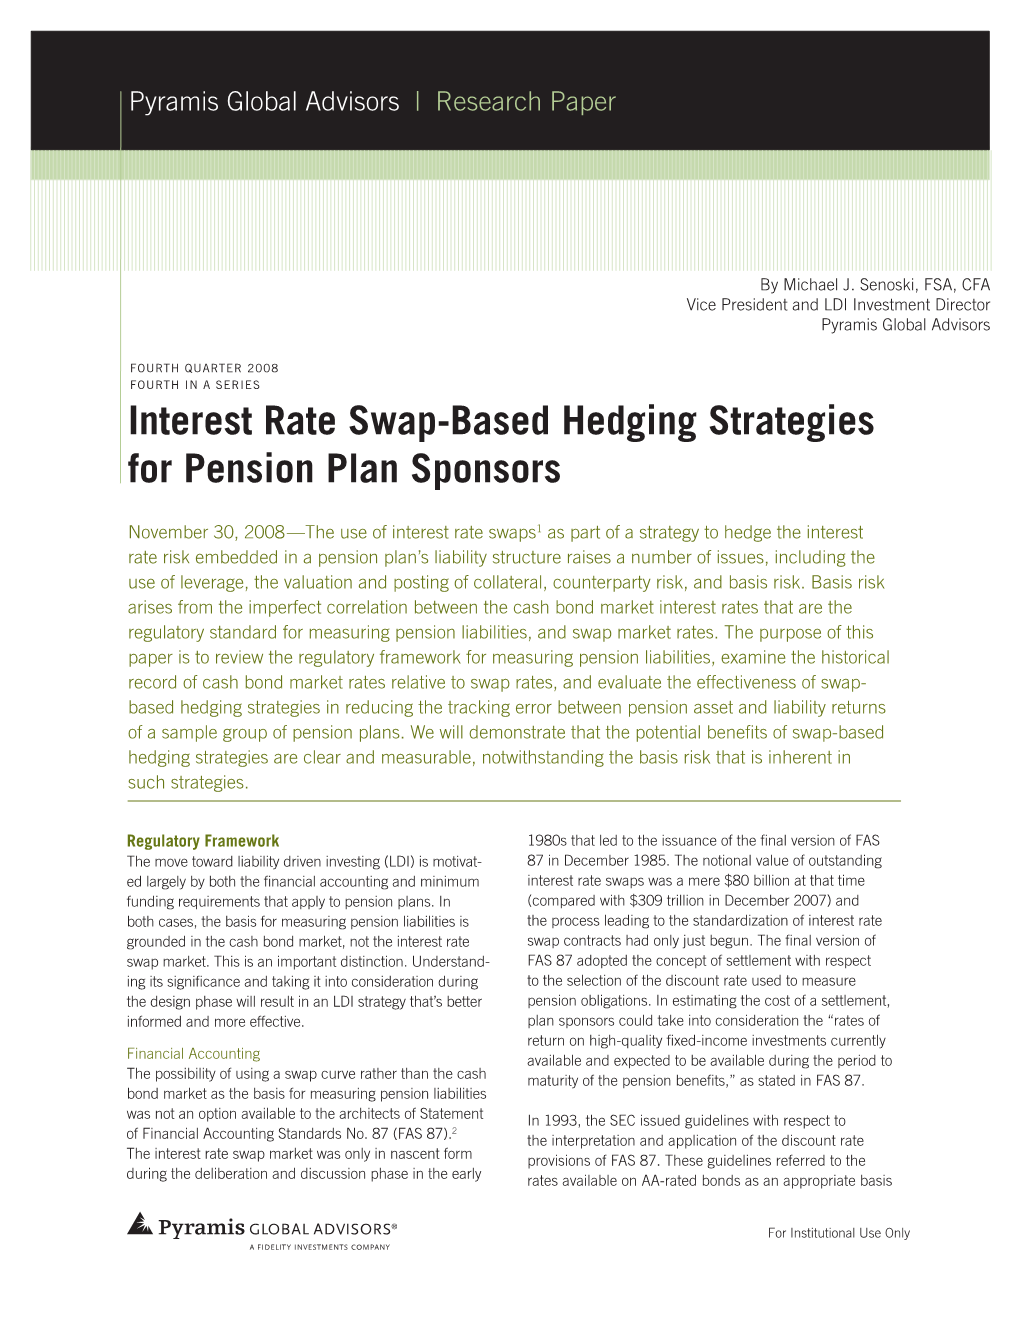 Interest Rate Swap-Based Hedging Strategies for Pension Plan Sponsors